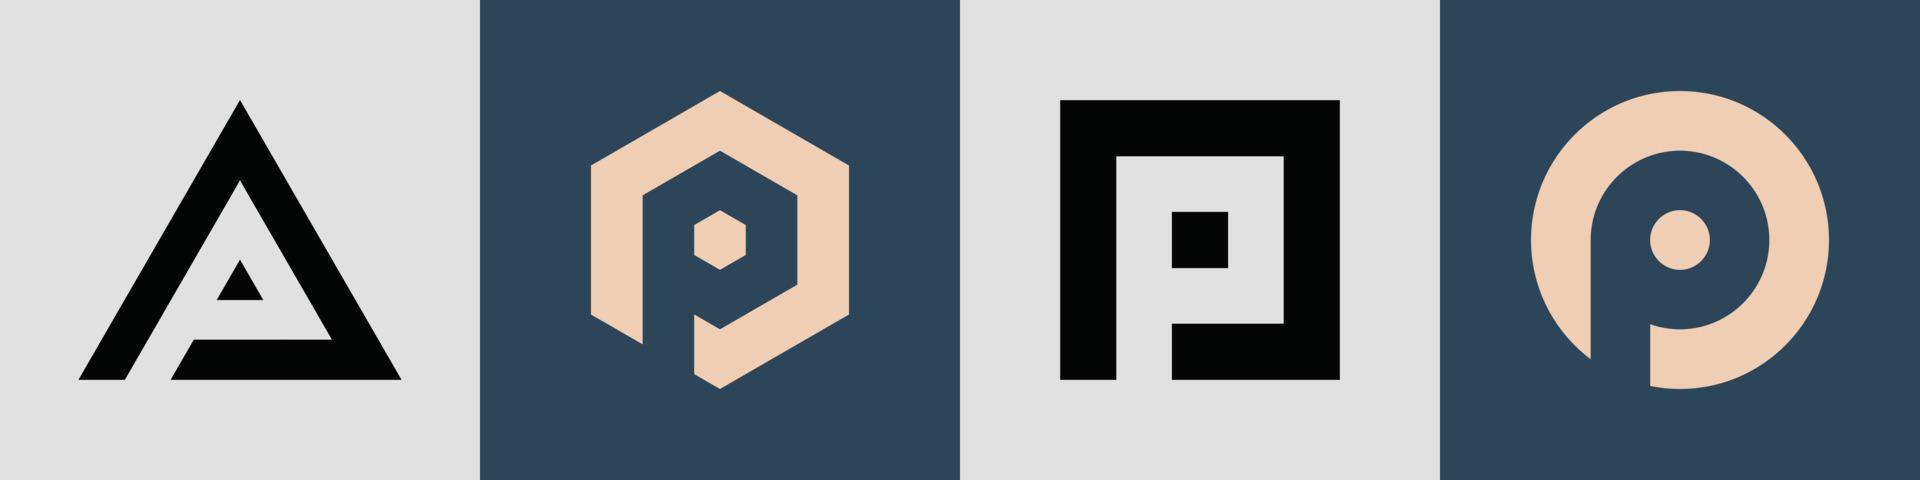 Creative simple Initial Letters P Logo Designs Bundle. vector